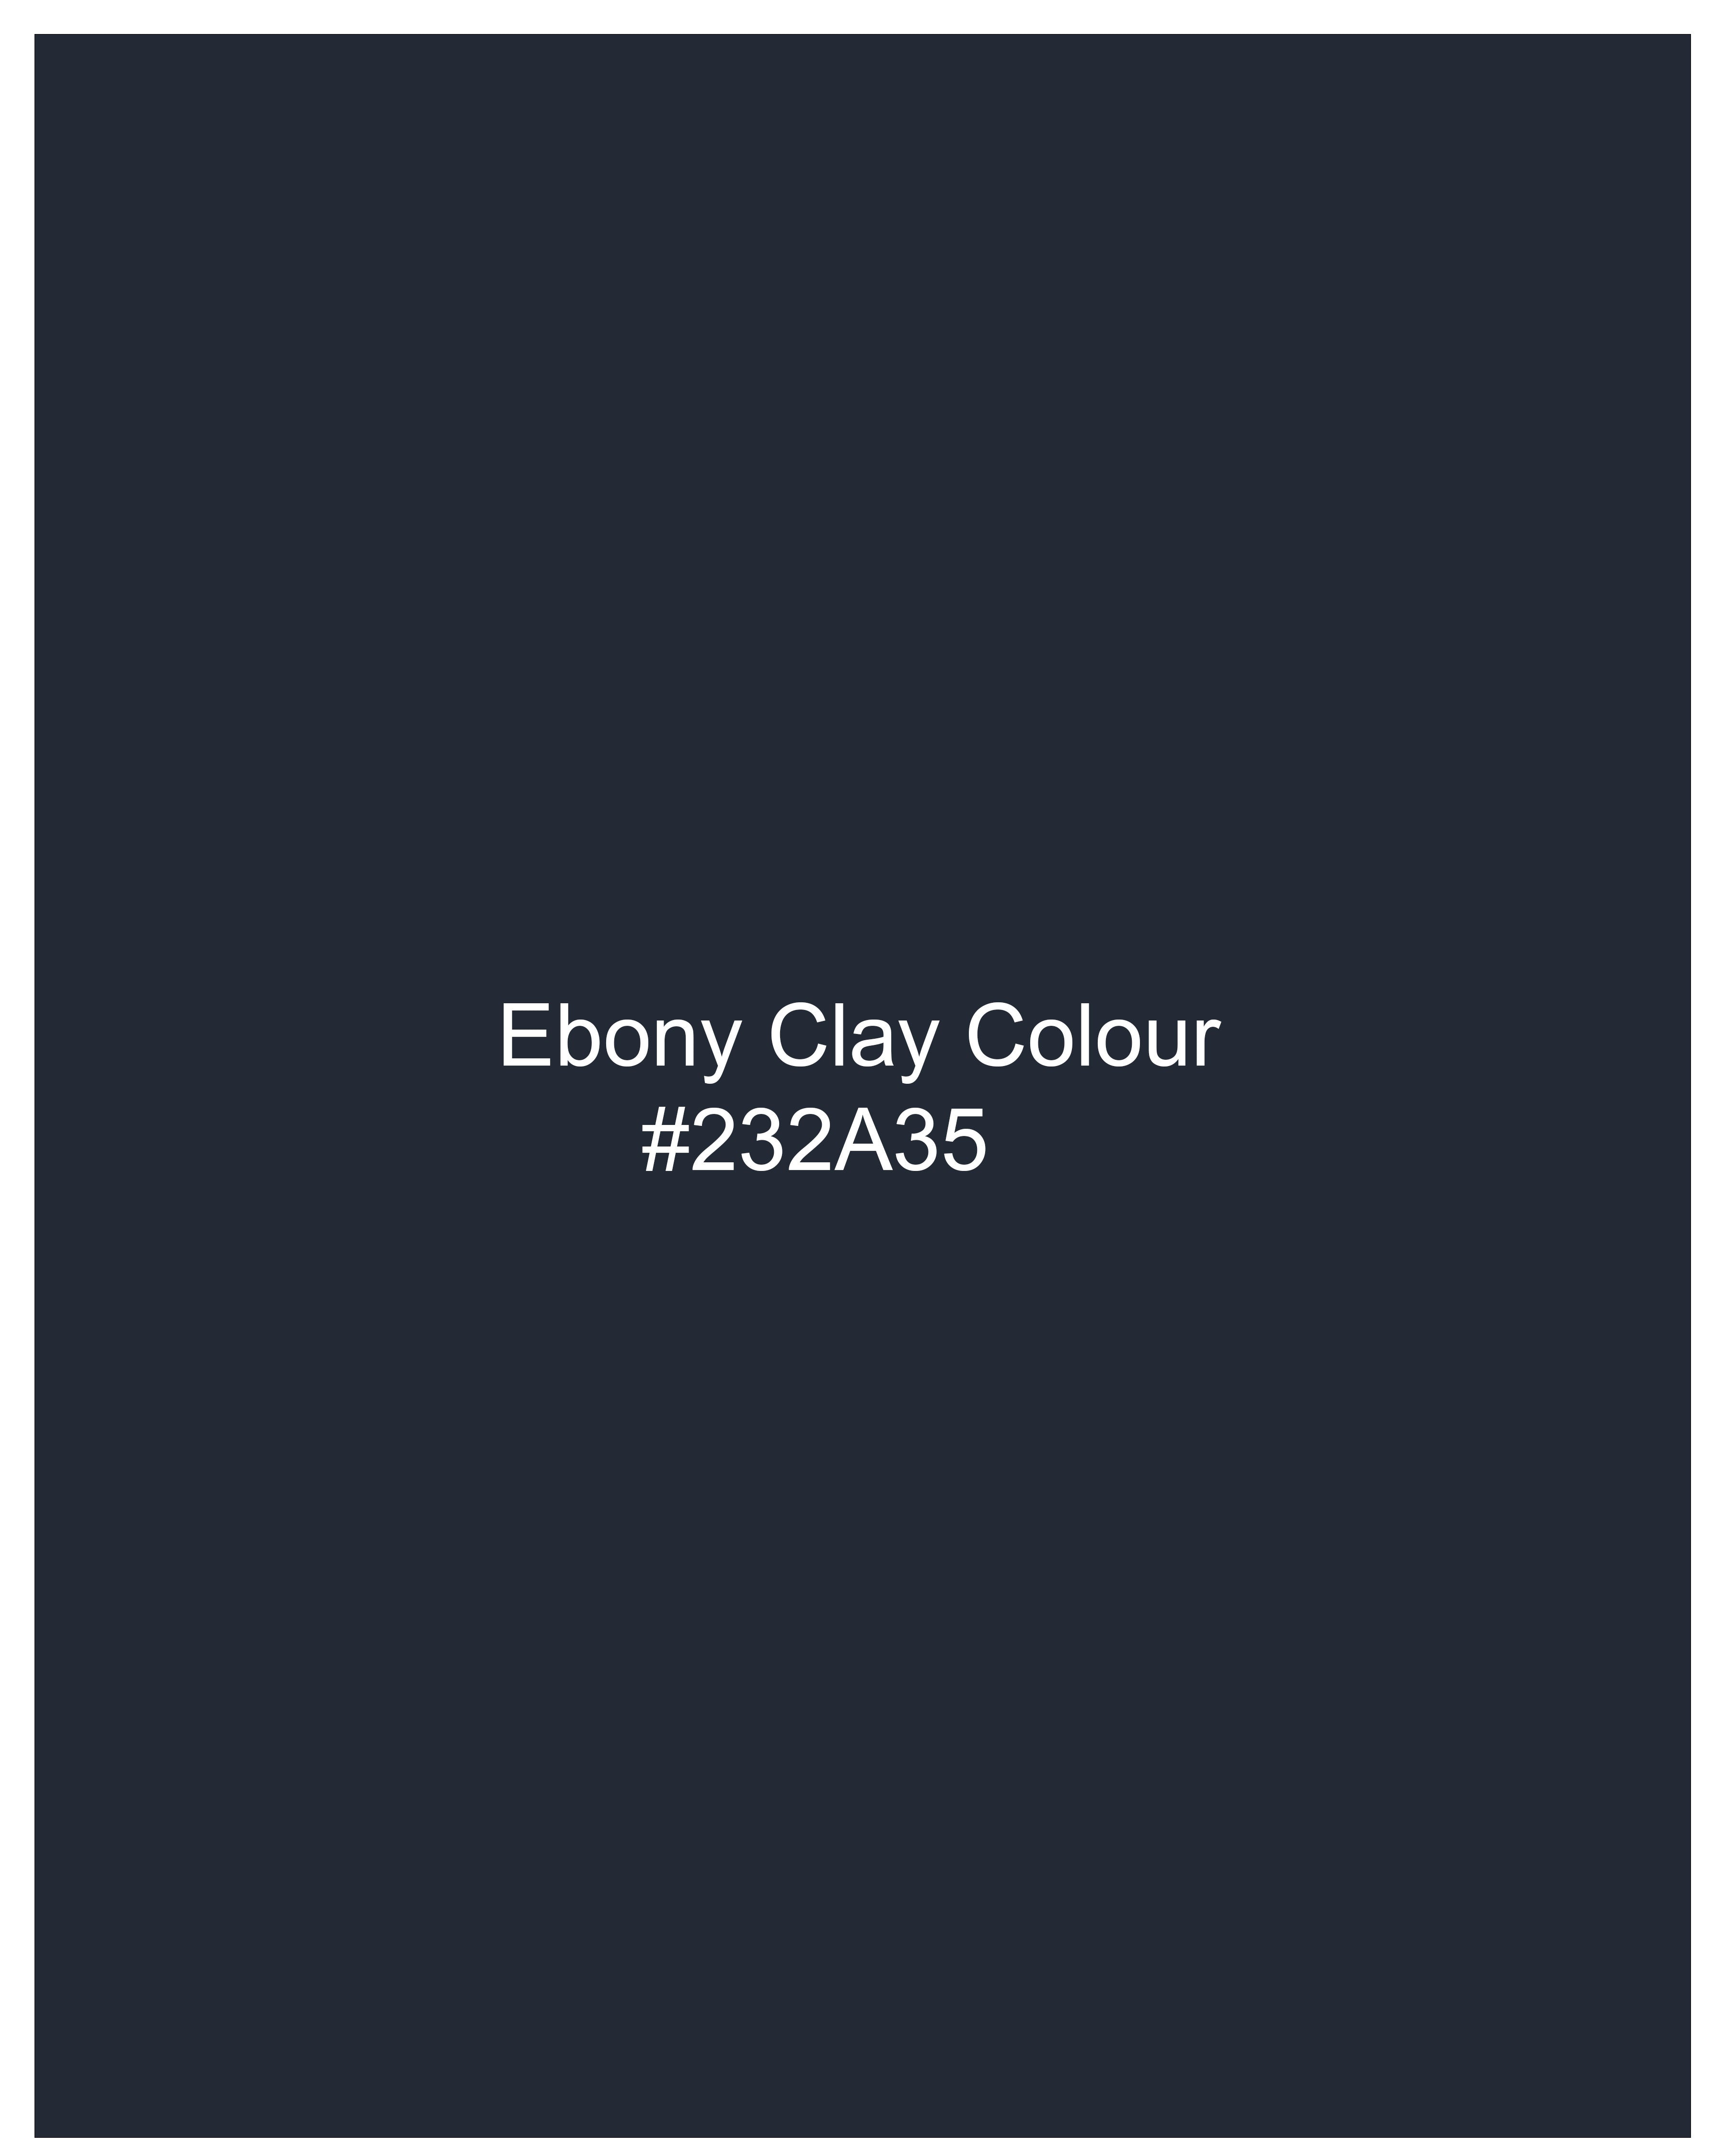 Ebony Clay Blue Windowpane Cross Buttoned Bandhgaala Suit ST2501-CBG2-36, ST2501-CBG2-38, ST2501-CBG2-40, ST2501-CBG2-42, ST2501-CBG2-44, ST2501-CBG2-46, ST2501-CBG2-48, ST2501-CBG2-50, ST2501-CBG2-52, ST2501-CBG2-54, ST2501-CBG2-56, ST2501-CBG2-58, ST2501-CBG2-60